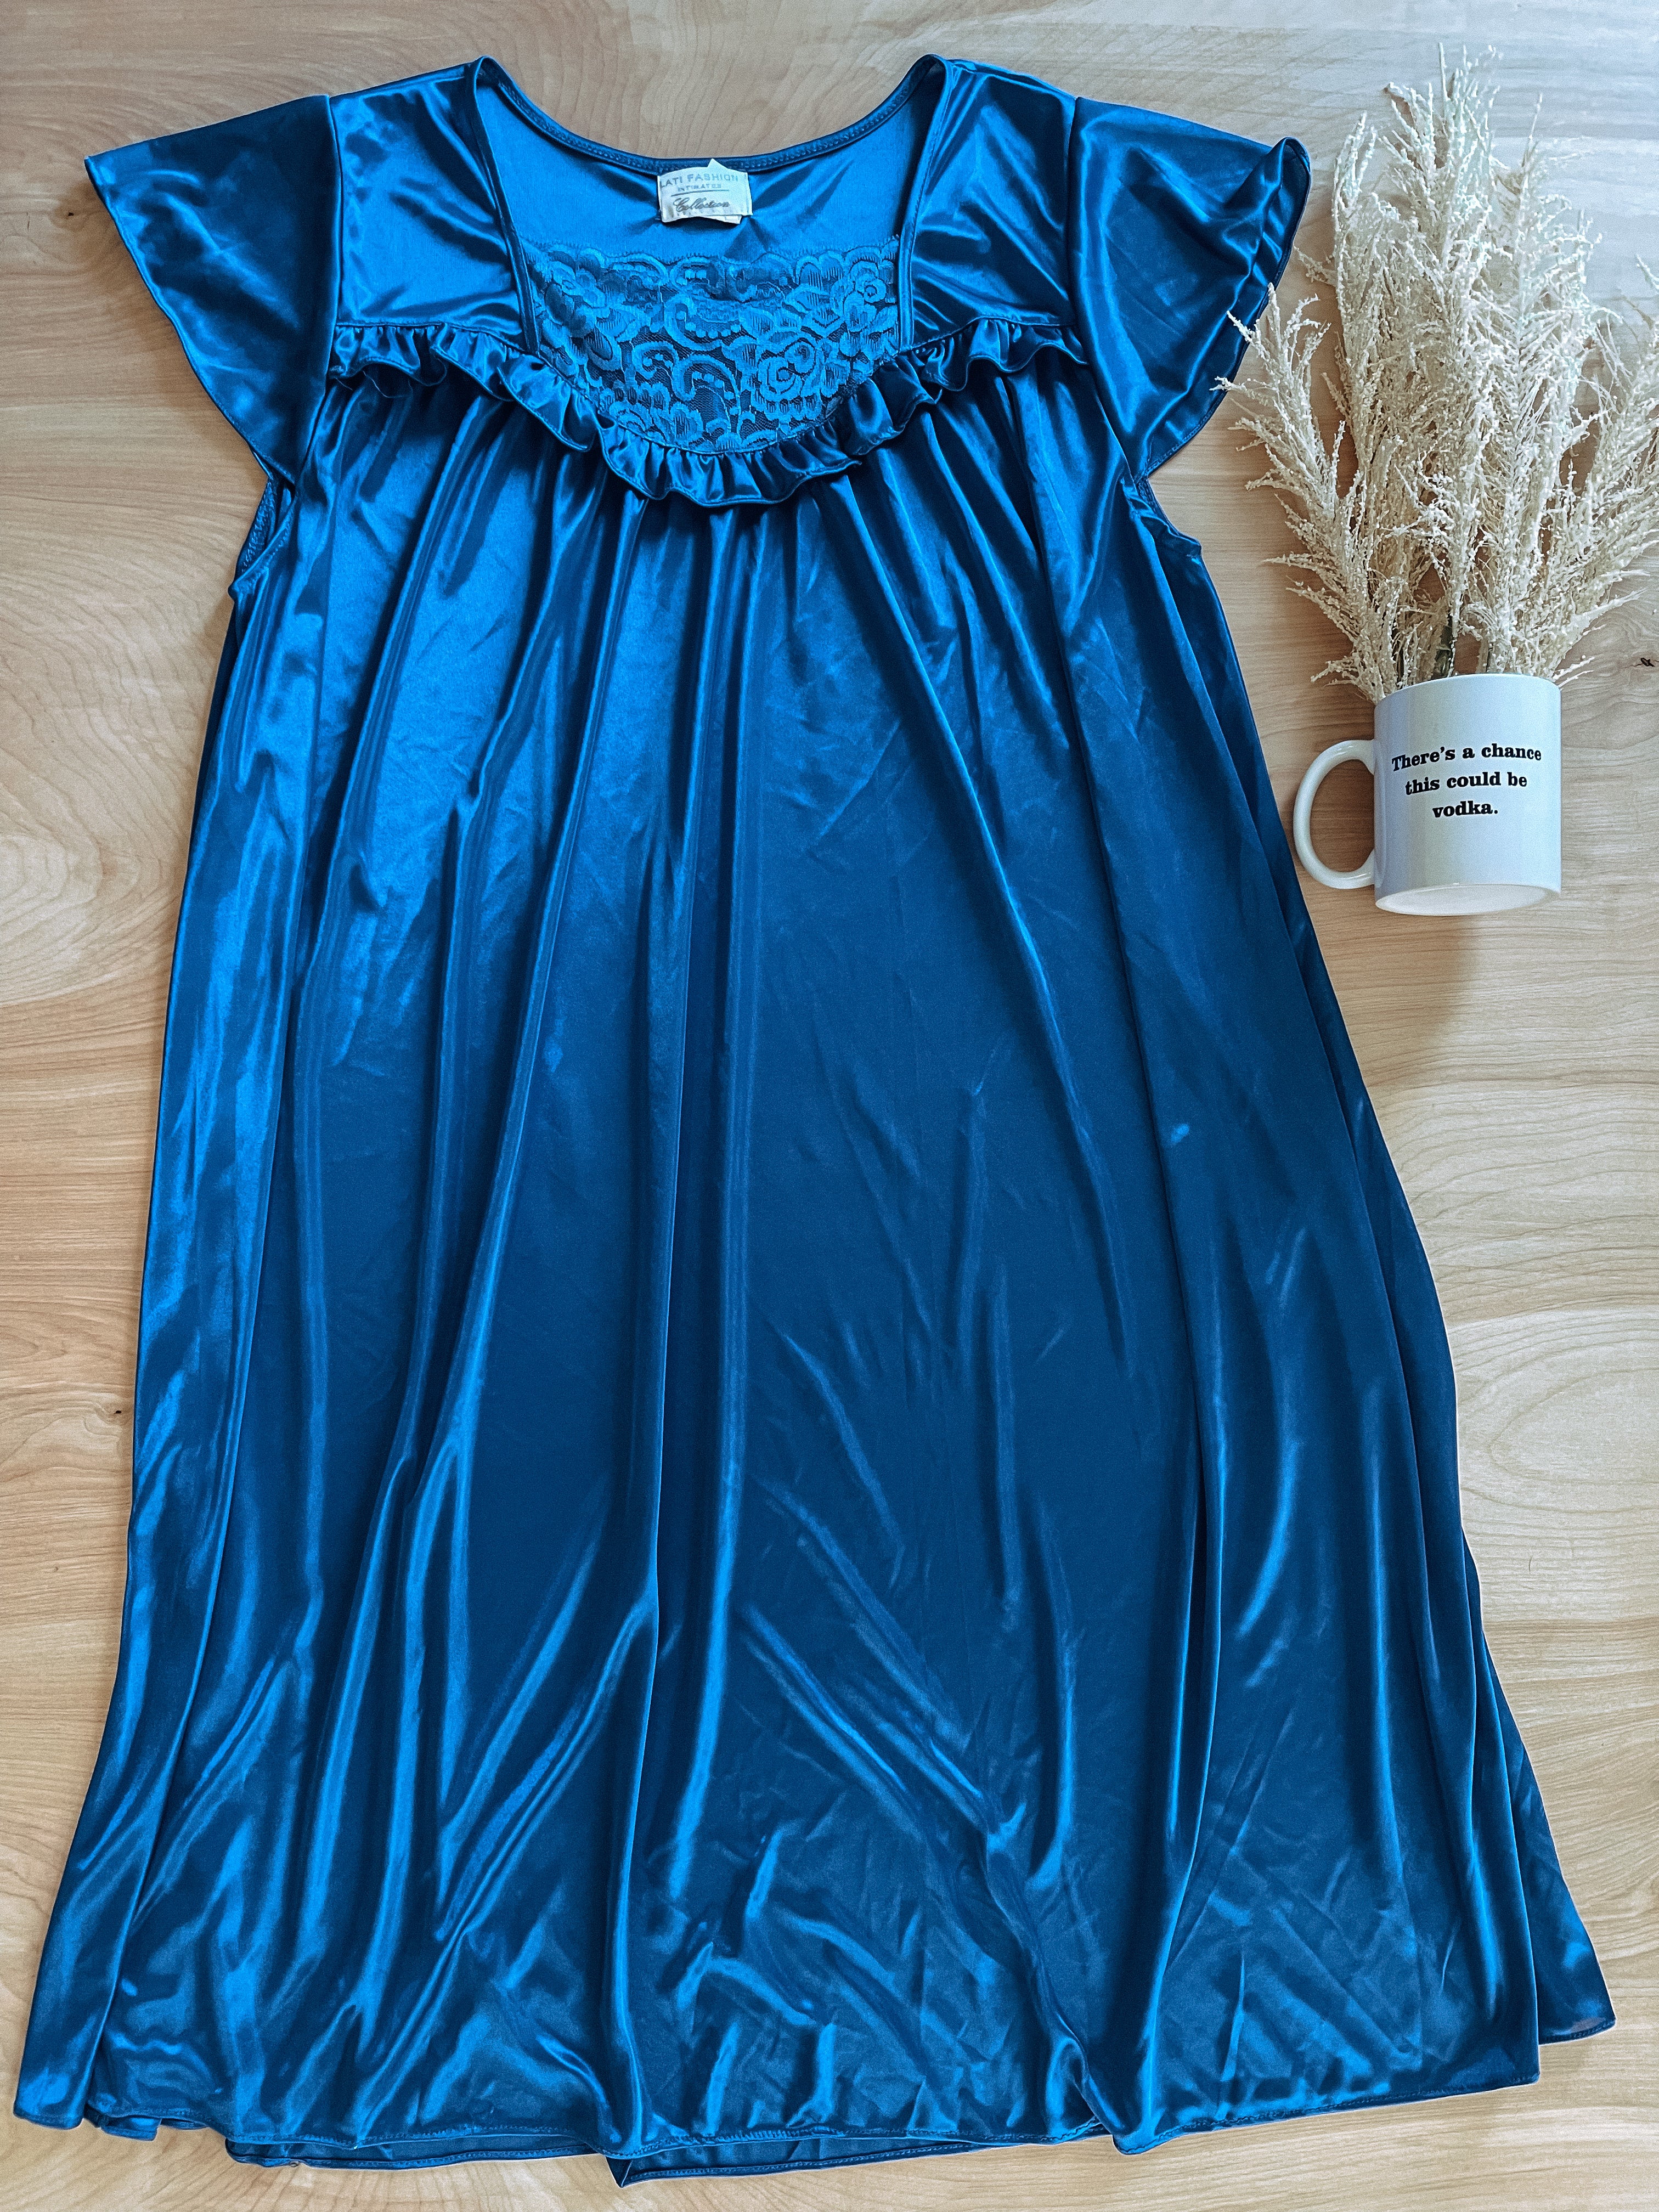 Royal Blue Nightgown